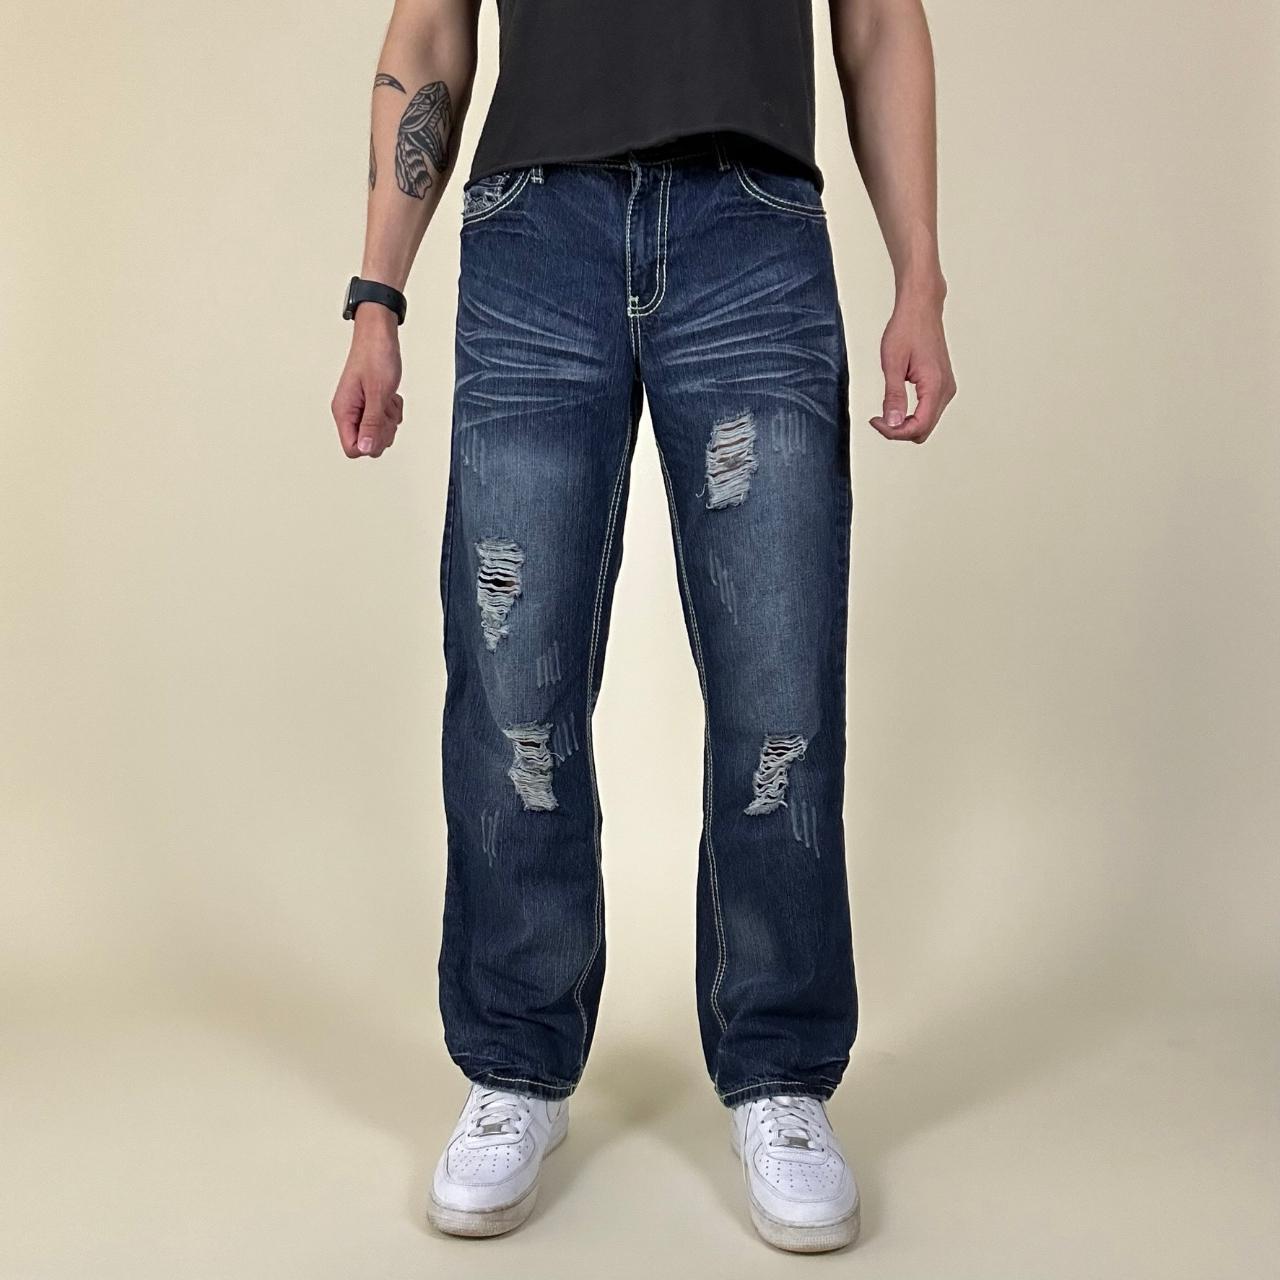 True Religion Men's Blue and Navy Jeans | Depop